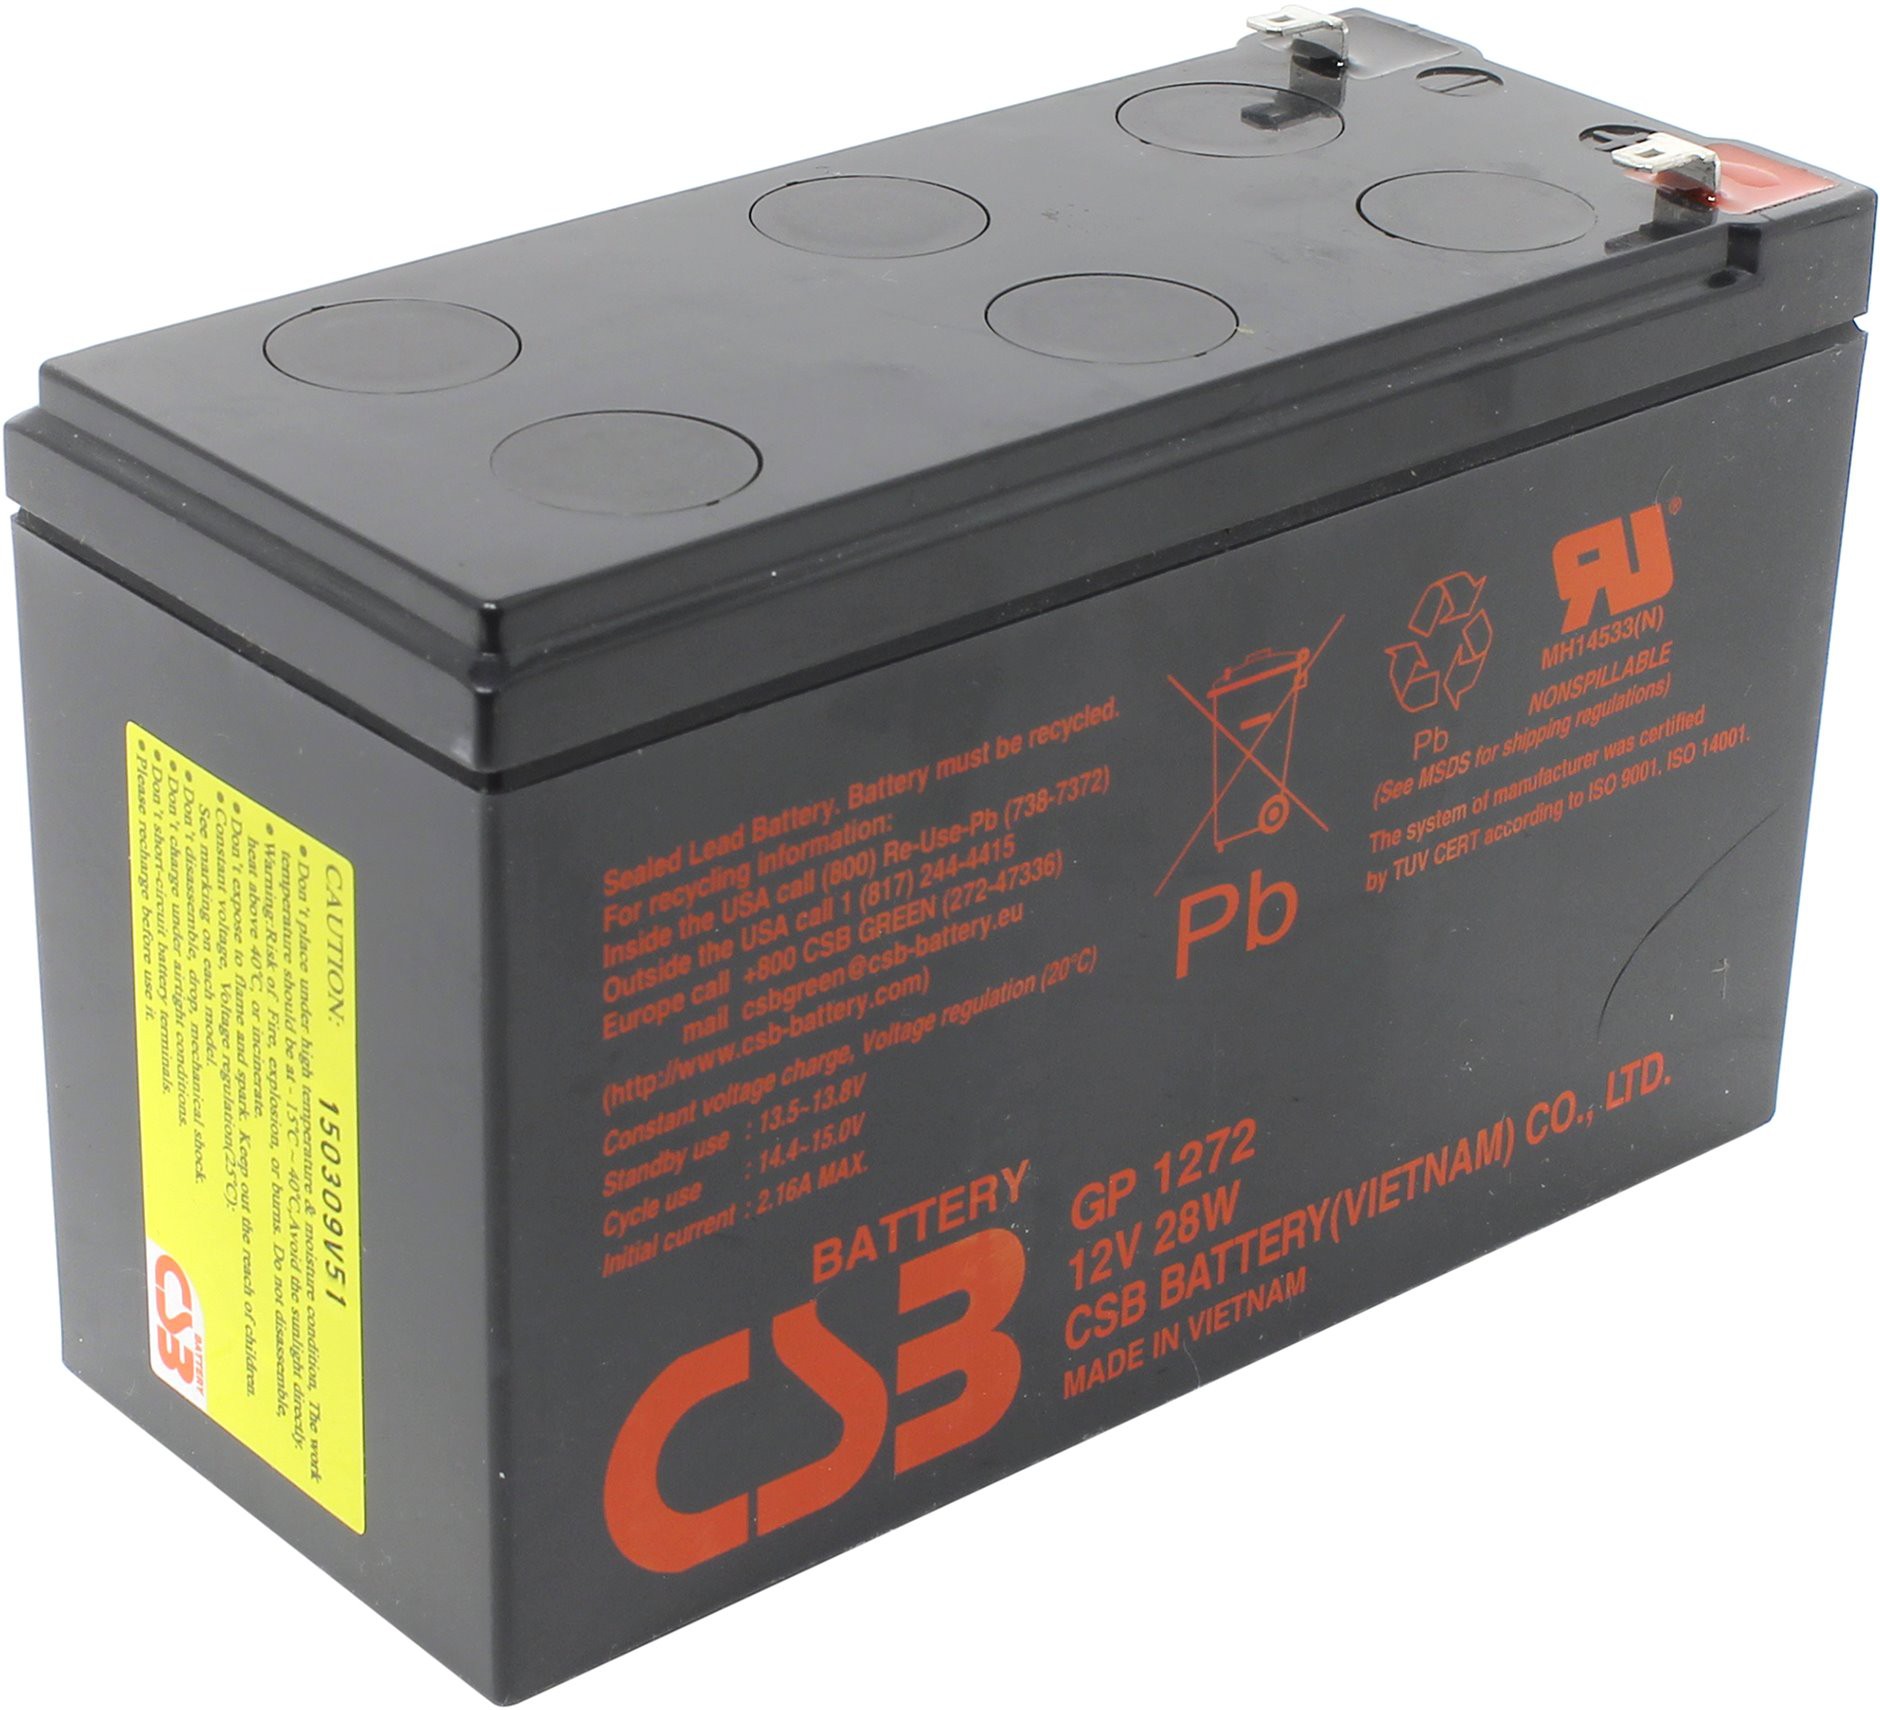 Аккумулятор для ибп 7.2Ah CSB GP1272 (12V, 7.2Ah)